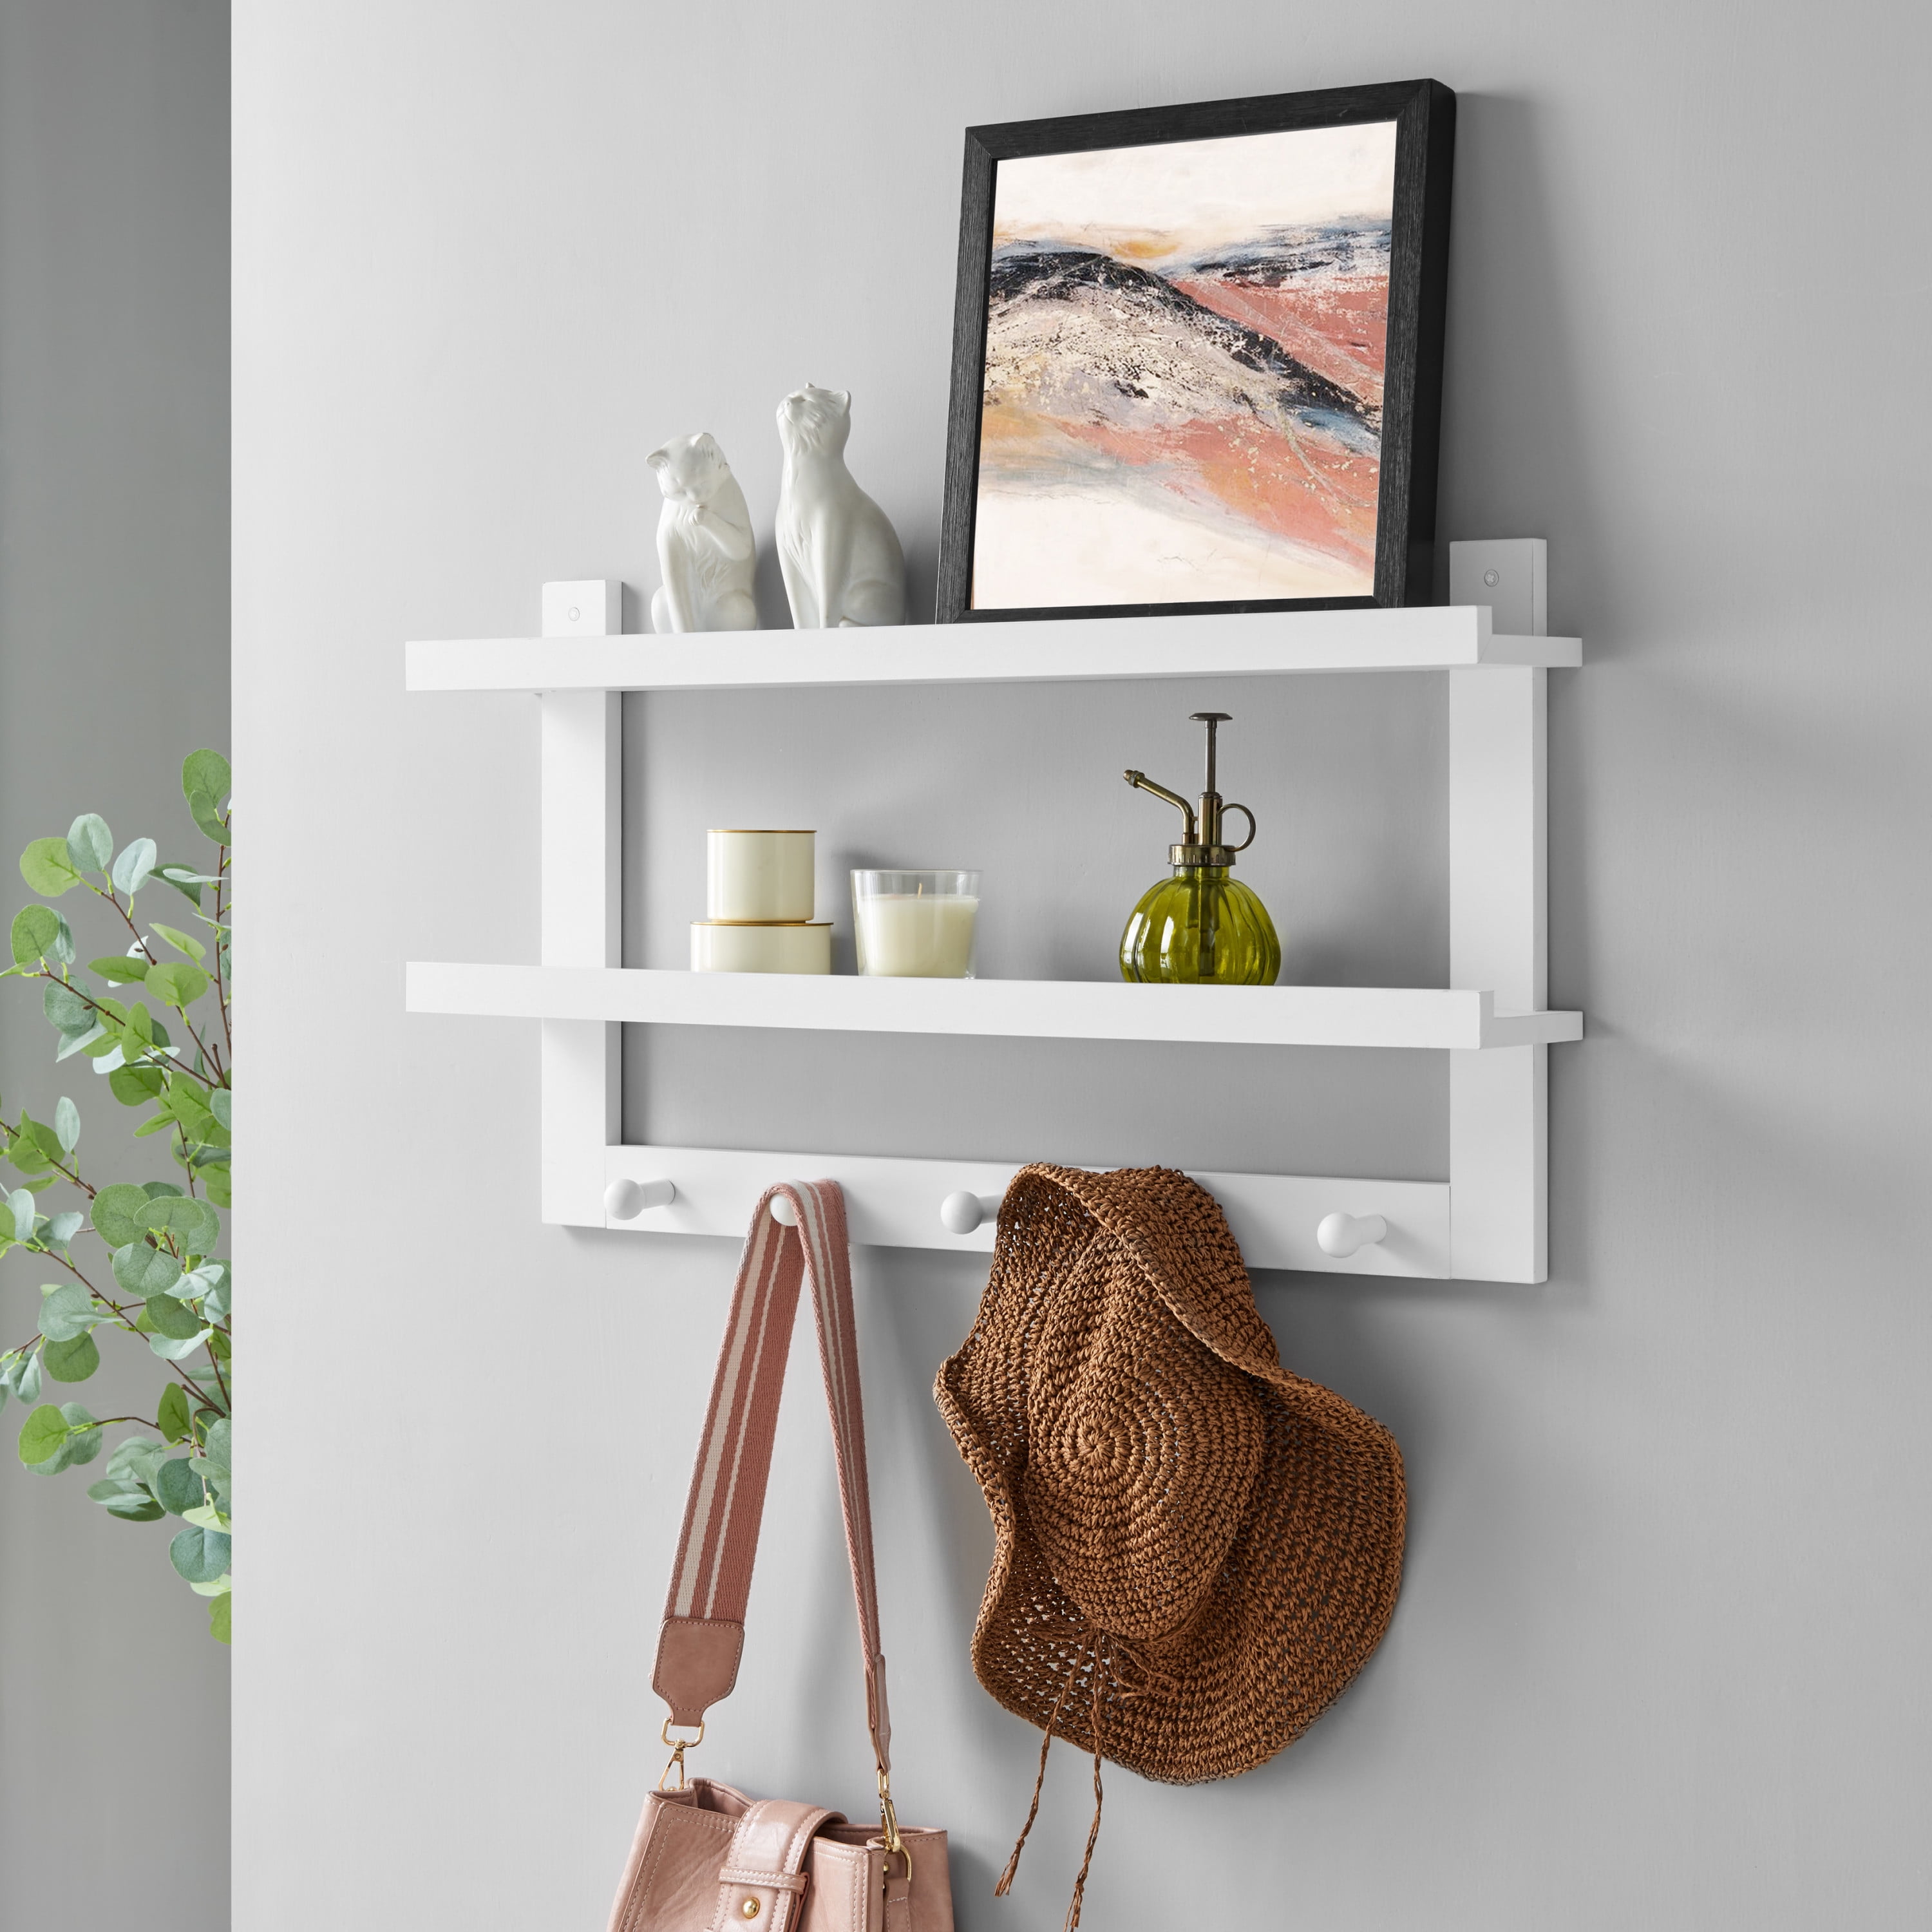 Danya B. Entryway Wall Coat Rack with Decorative Ledge Shelf and Hooks - White